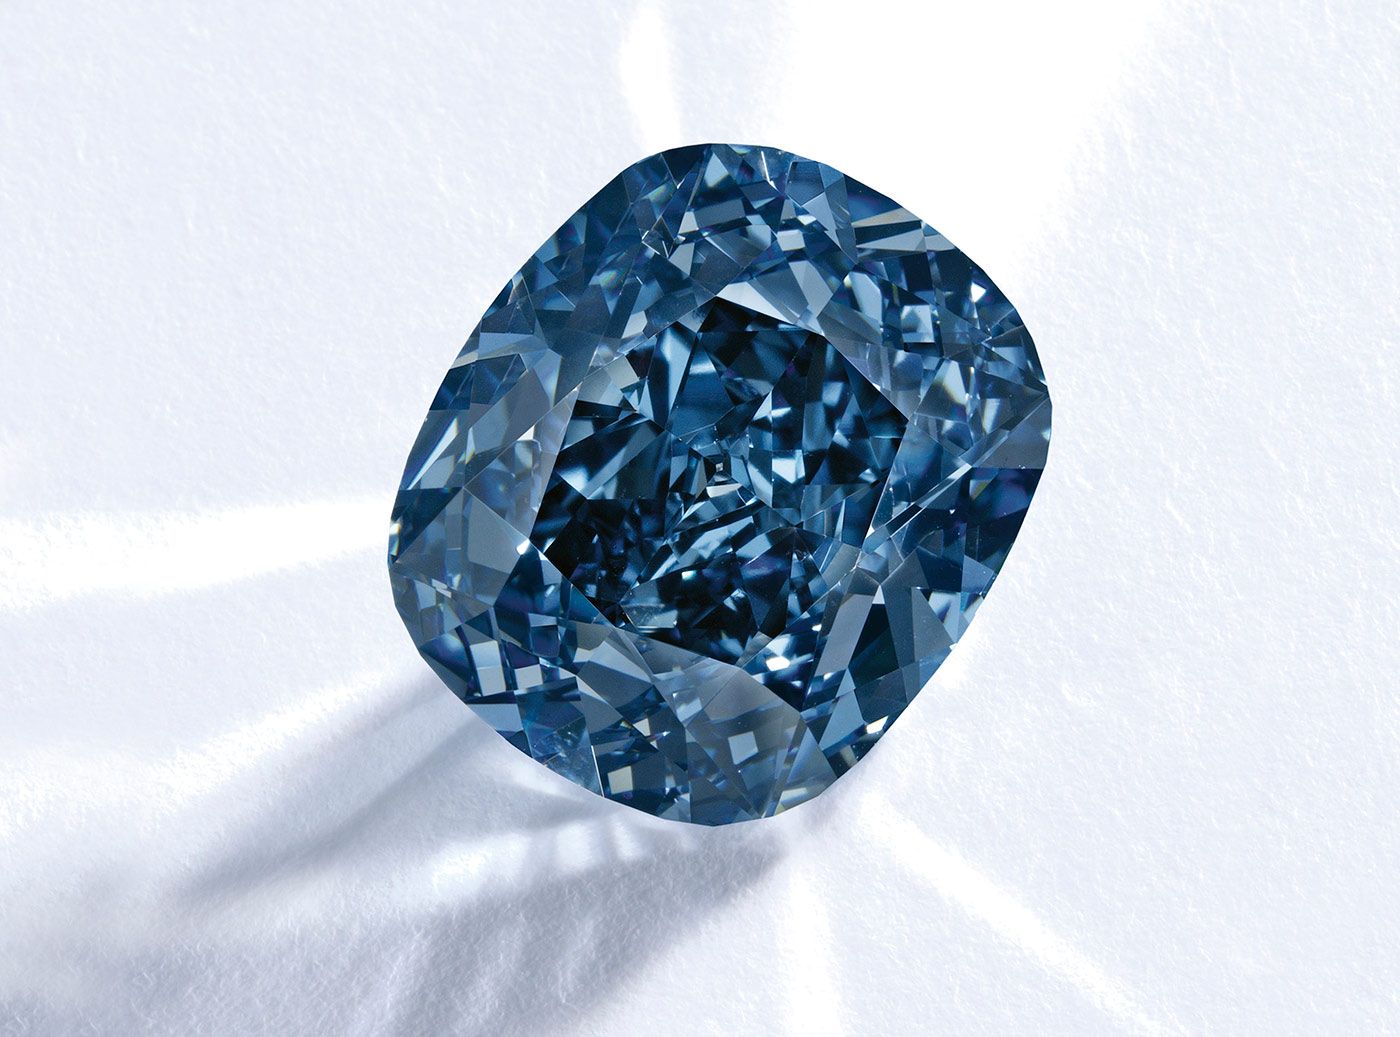 The Blue Moon of Josephine diamond at 12.03 carats